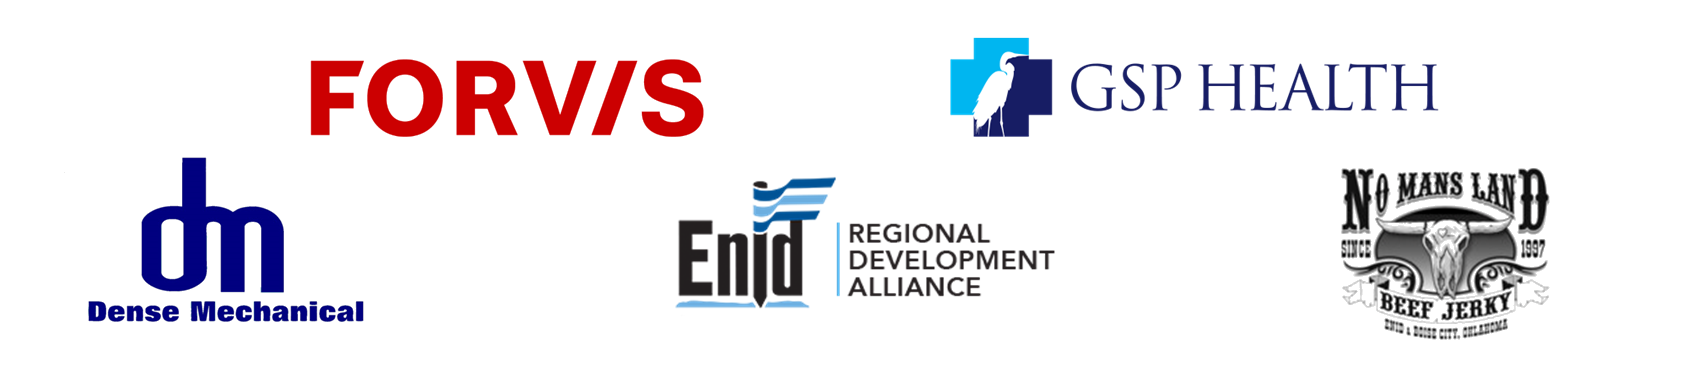 FORVIS, GSP Health, Enid Regional Development Alliance, Dense Mechanical, No Mans Land Foods